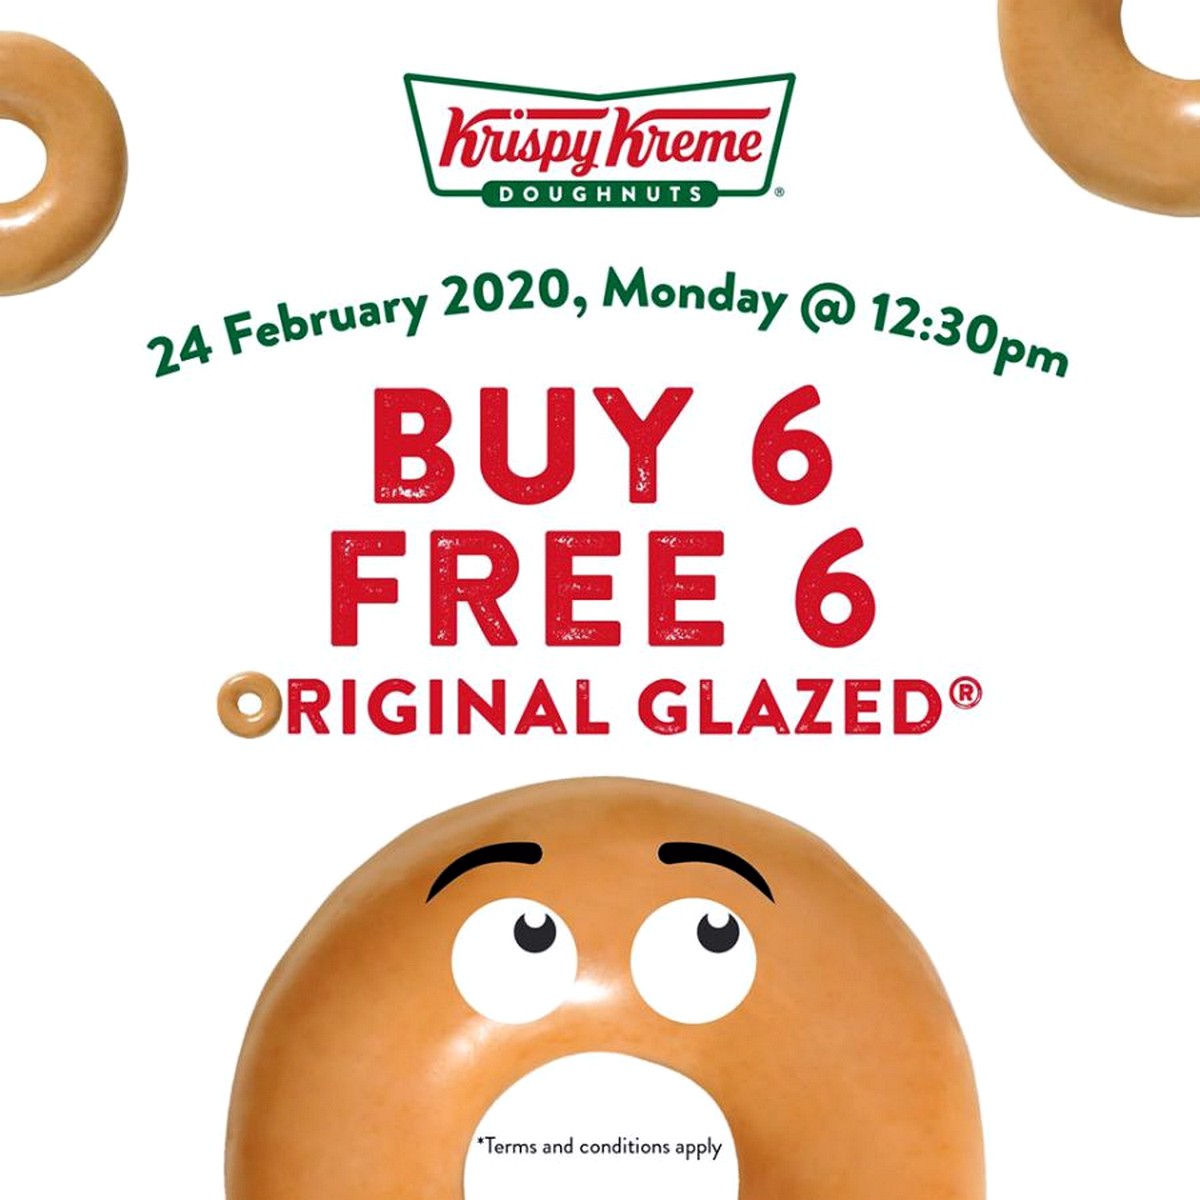 24-Feb-2020-Krispy-Kreme-Buy-6-FREE-6-Doughnuts-Promotion-Singapore-2021-Offers-Food-Discounts 24 Feb 2020: Krispy Kreme Buy 6 FREE 6 Doughnuts Promotion